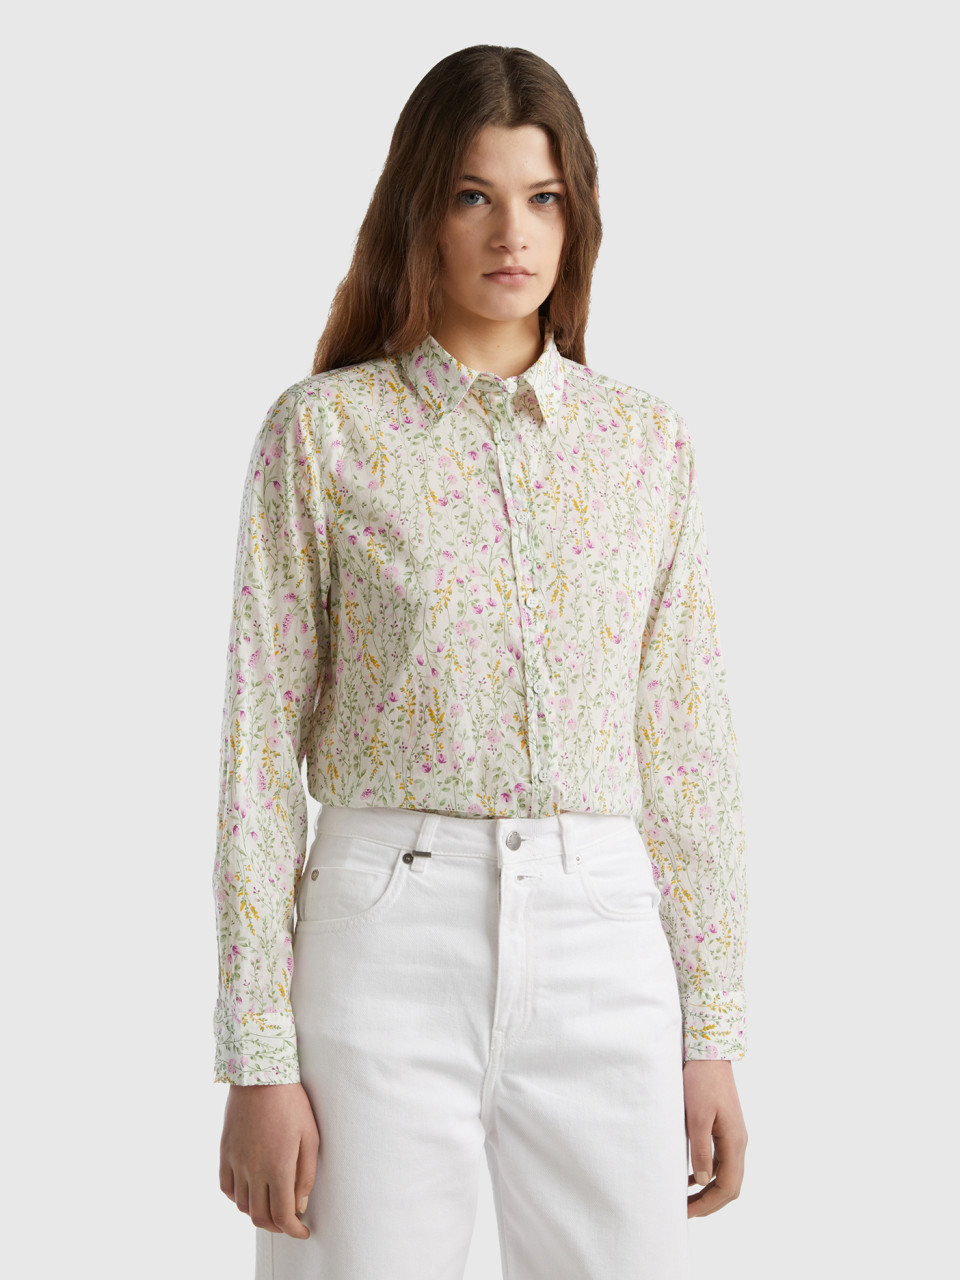 Benetton, 100% Cotton Patterned Shirt, White, Women